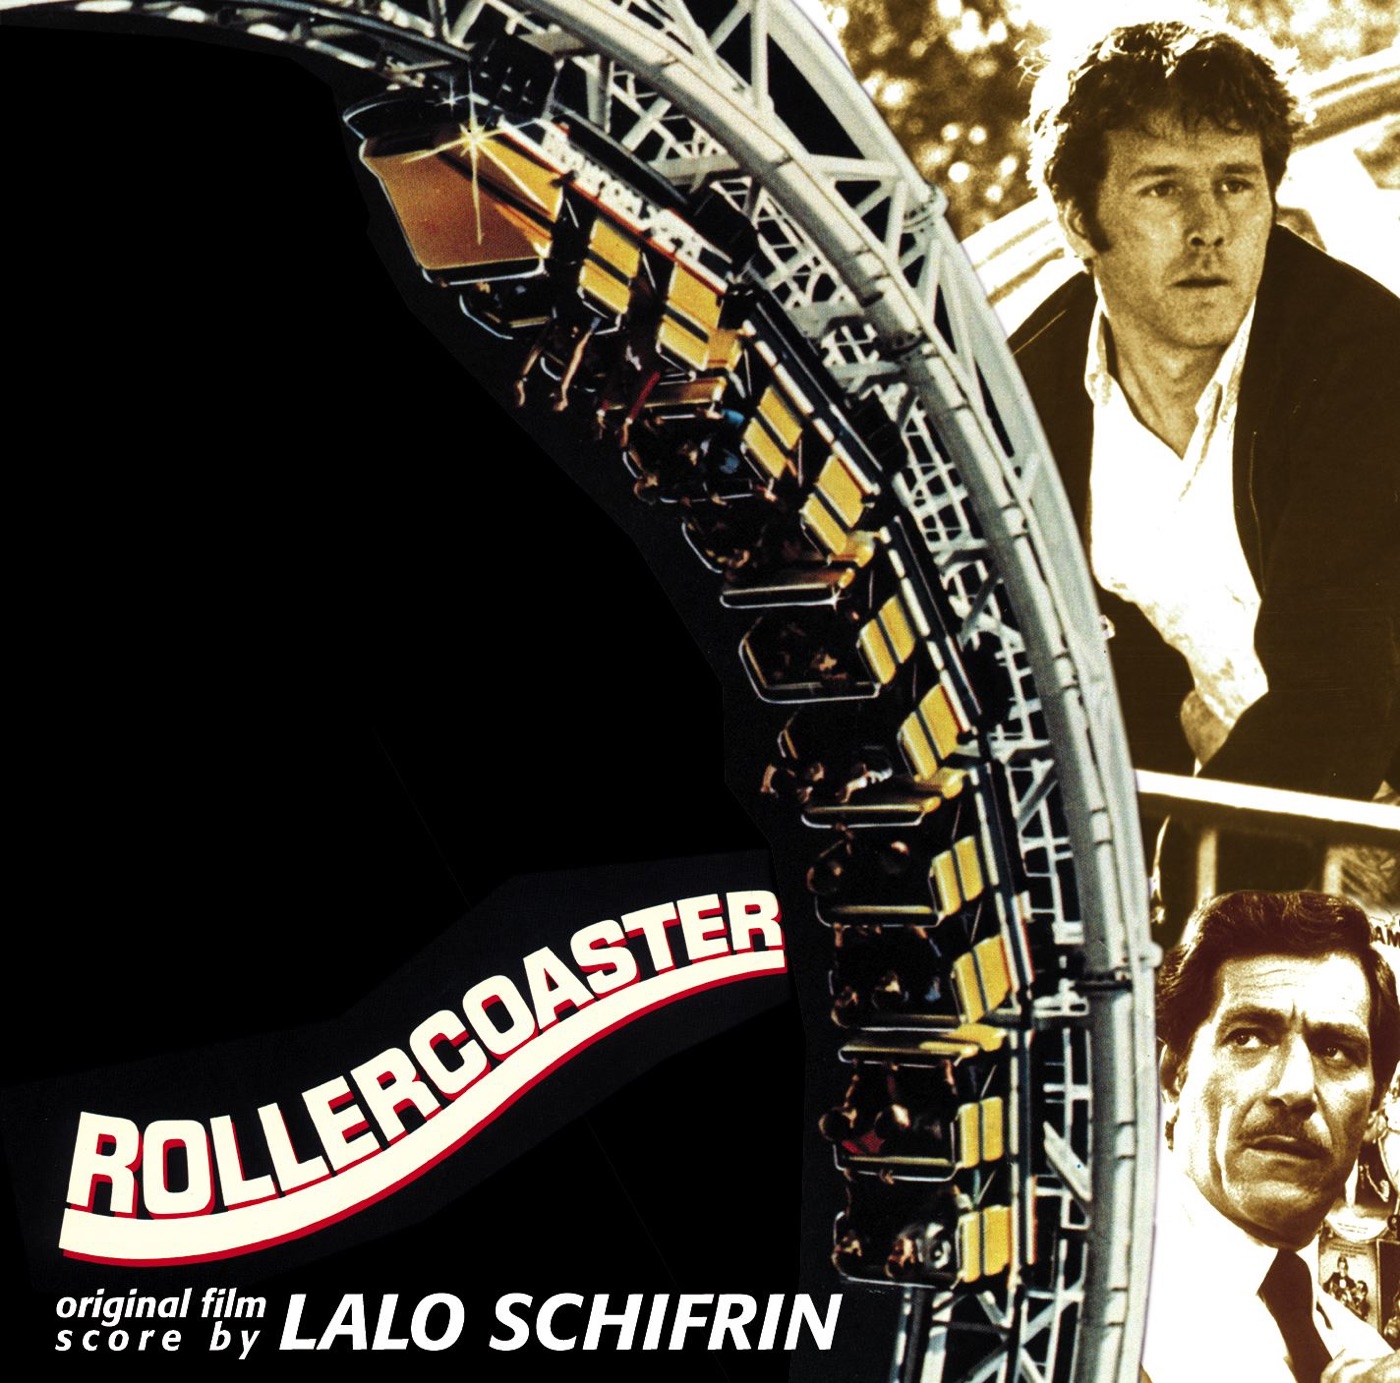 Rollercoaster by Lalo Schifrin